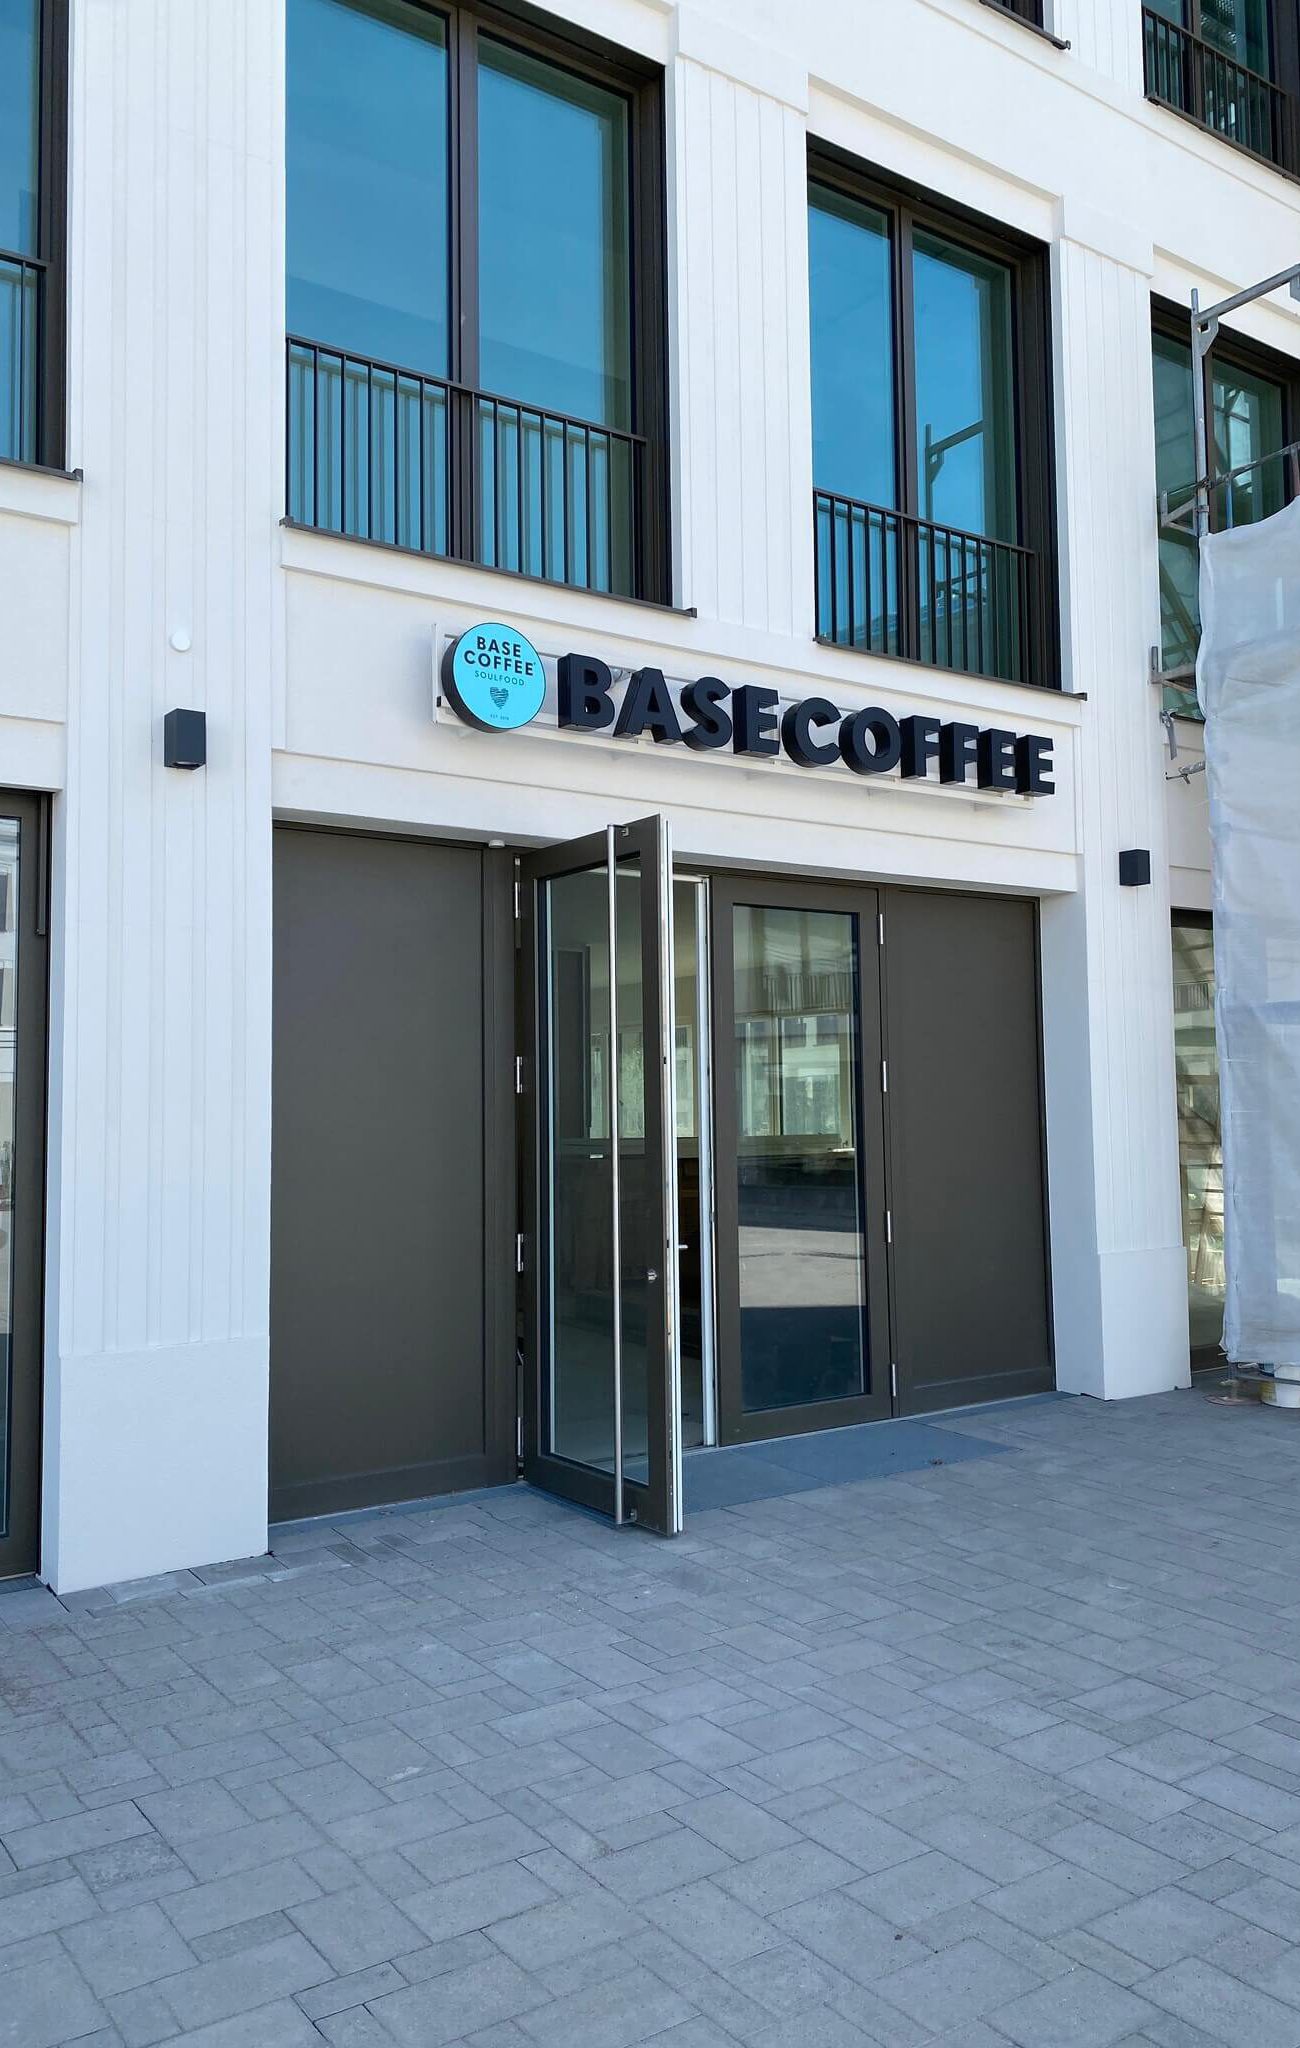 basecoffee franchise